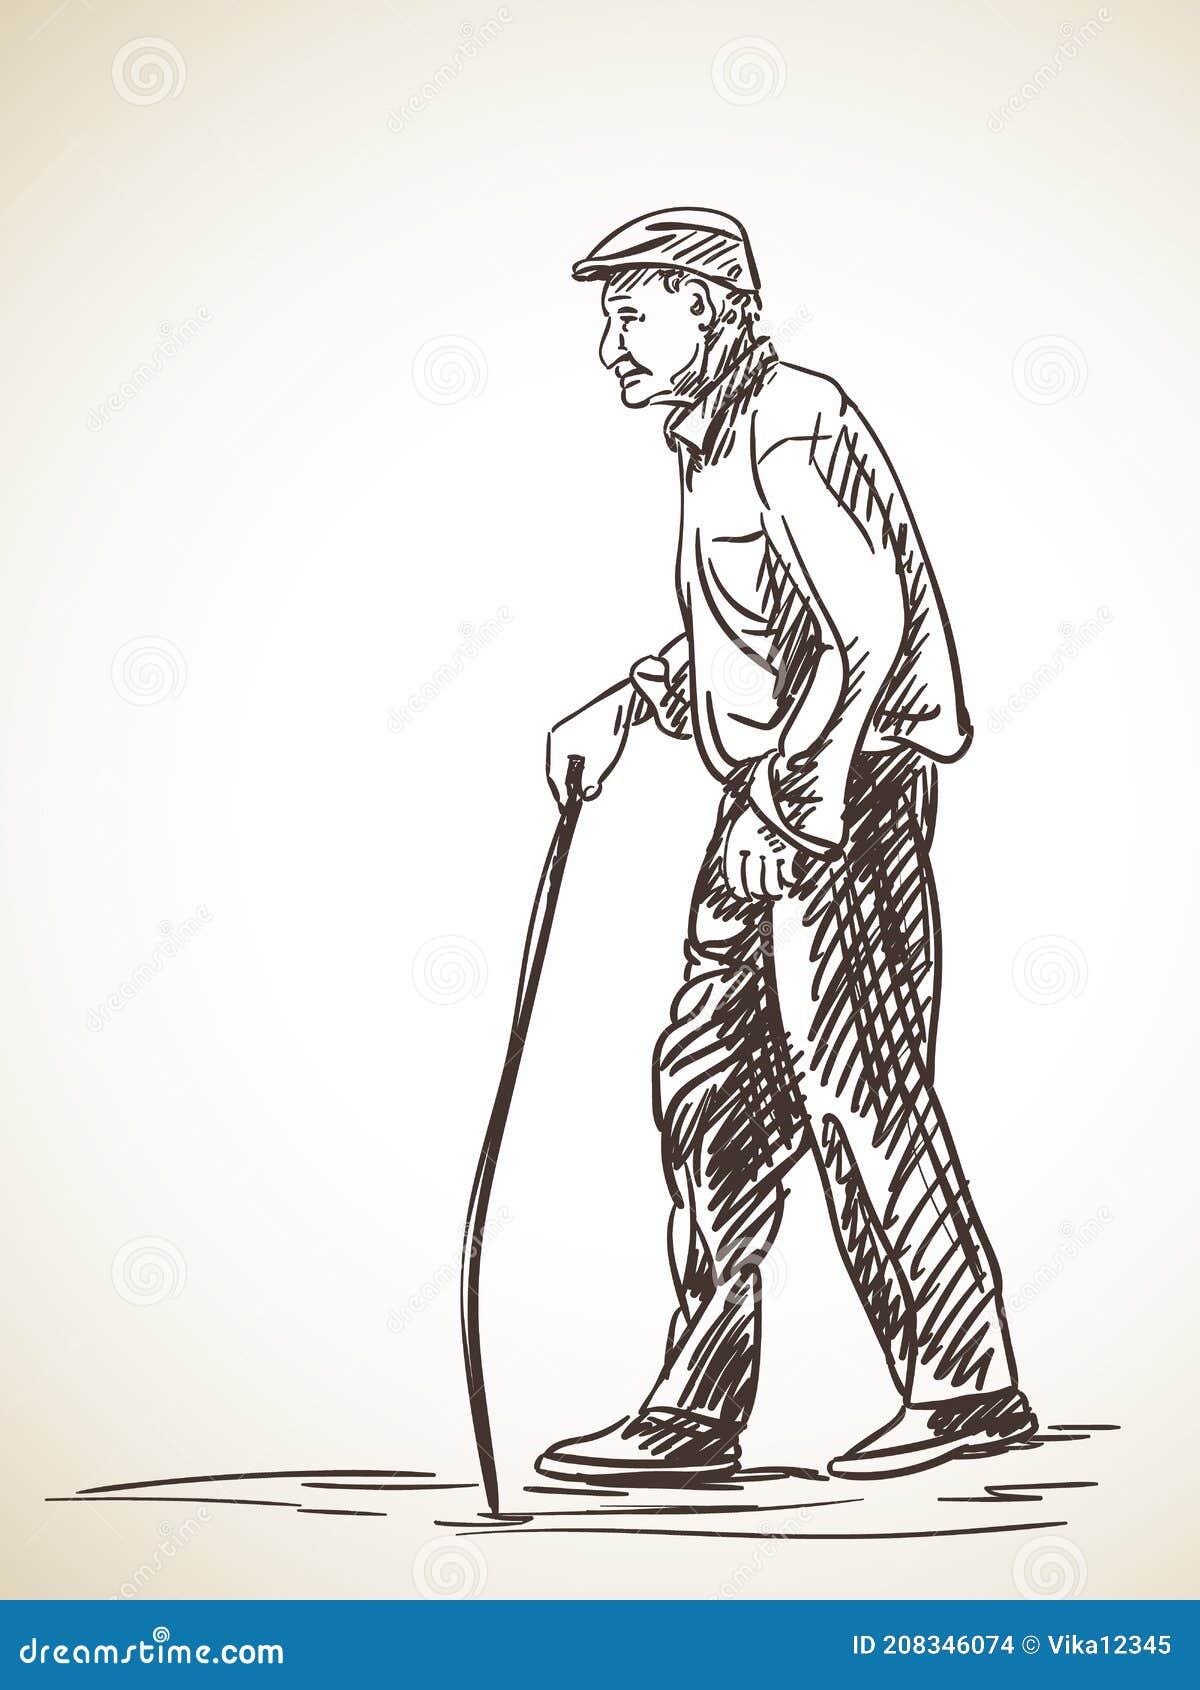 Sketch Walking Man Smart Phone Hand Stock Vector (Royalty Free) 331593512 |  Shutterstock